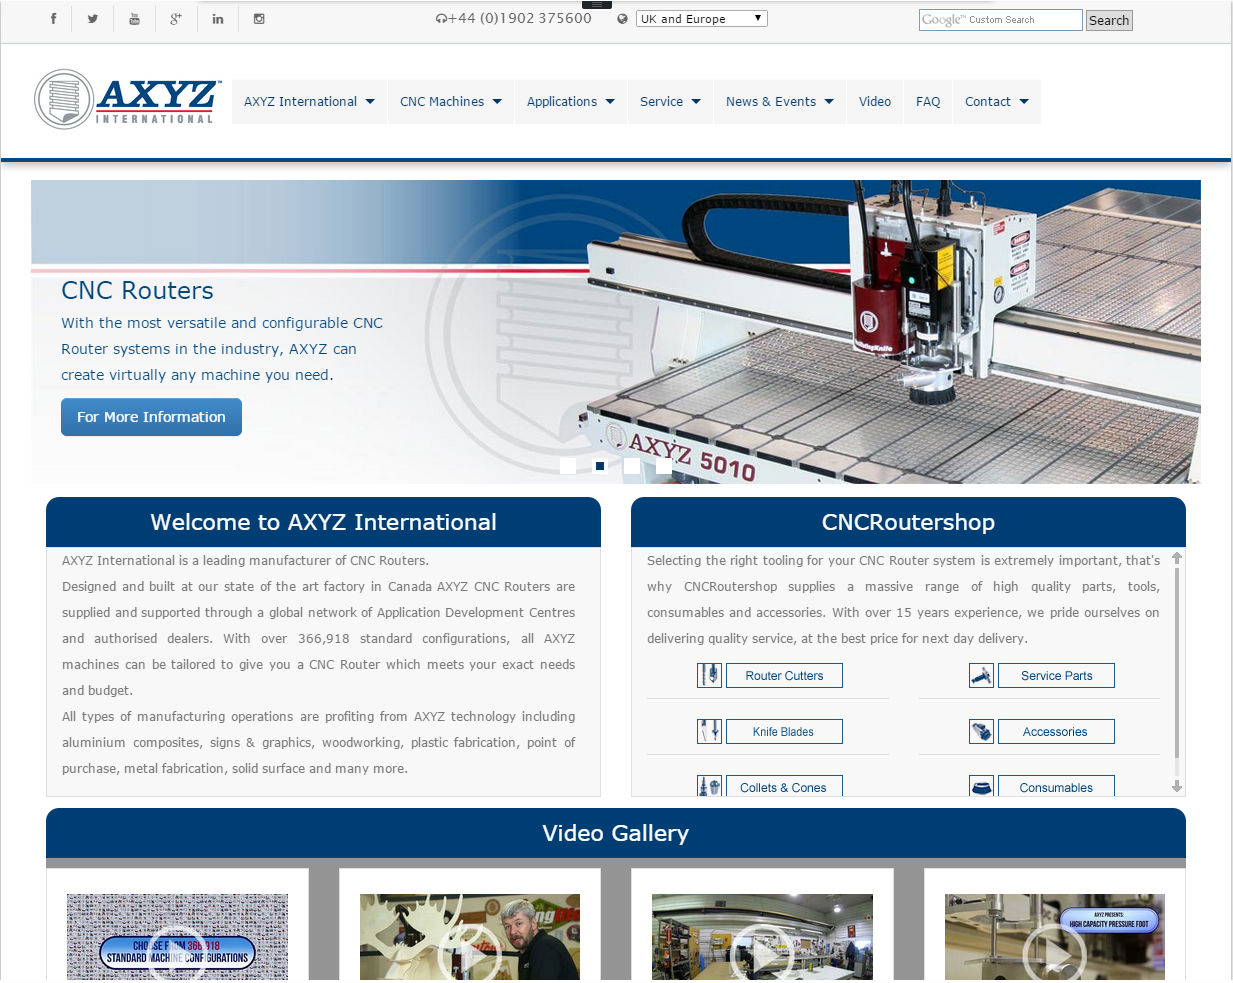 cleartarn website - AXYZ International CNC Router Systems